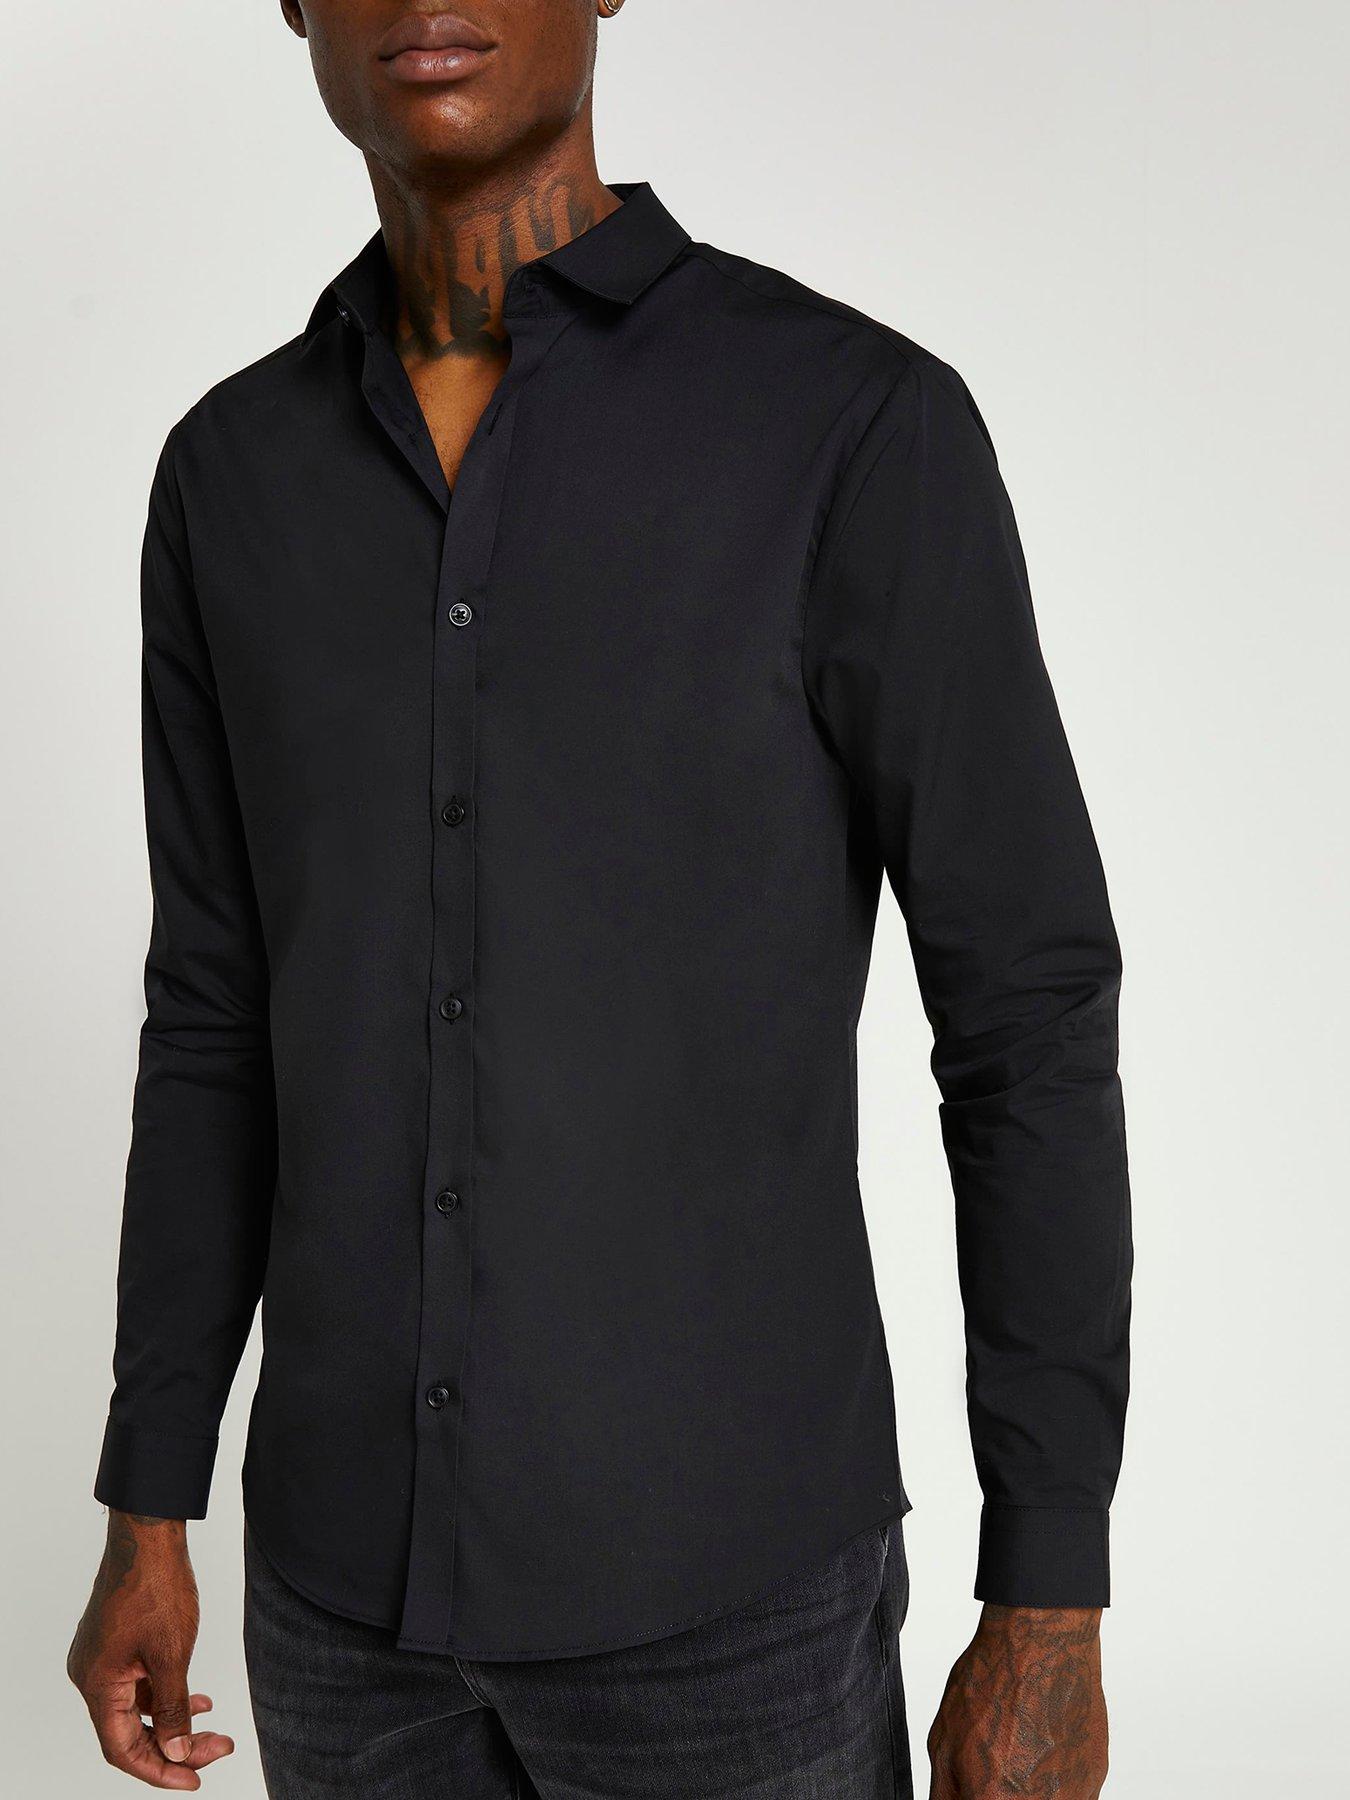 River Island Long Sleeve Cvc Slim Fit Shirt - Black | very.co.uk